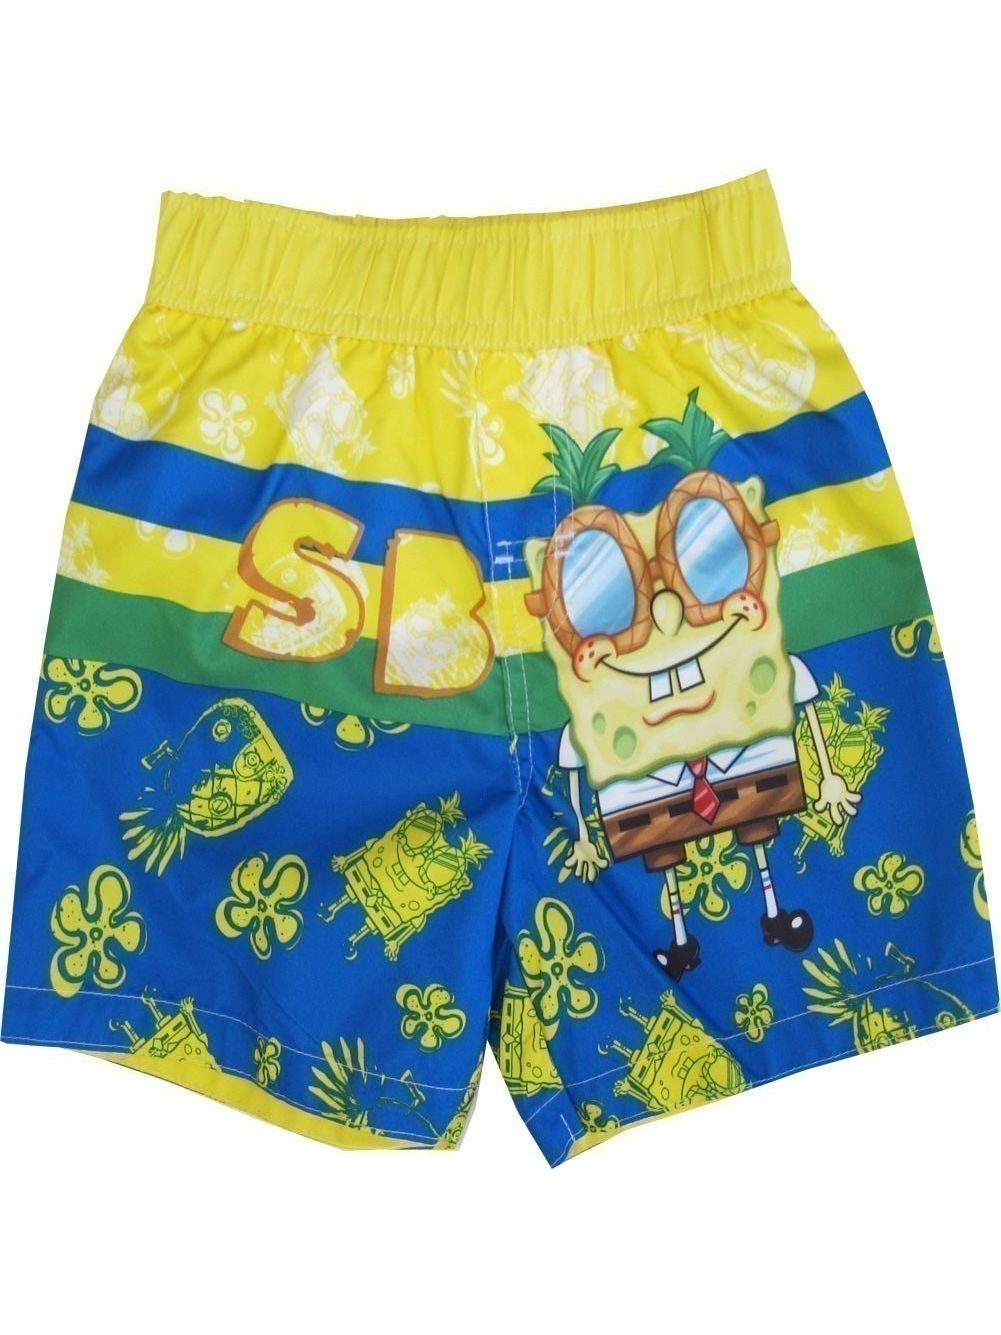 Men Design Summer Shorts Spongebob Squarepants 3D Digital Print Swim Shorts